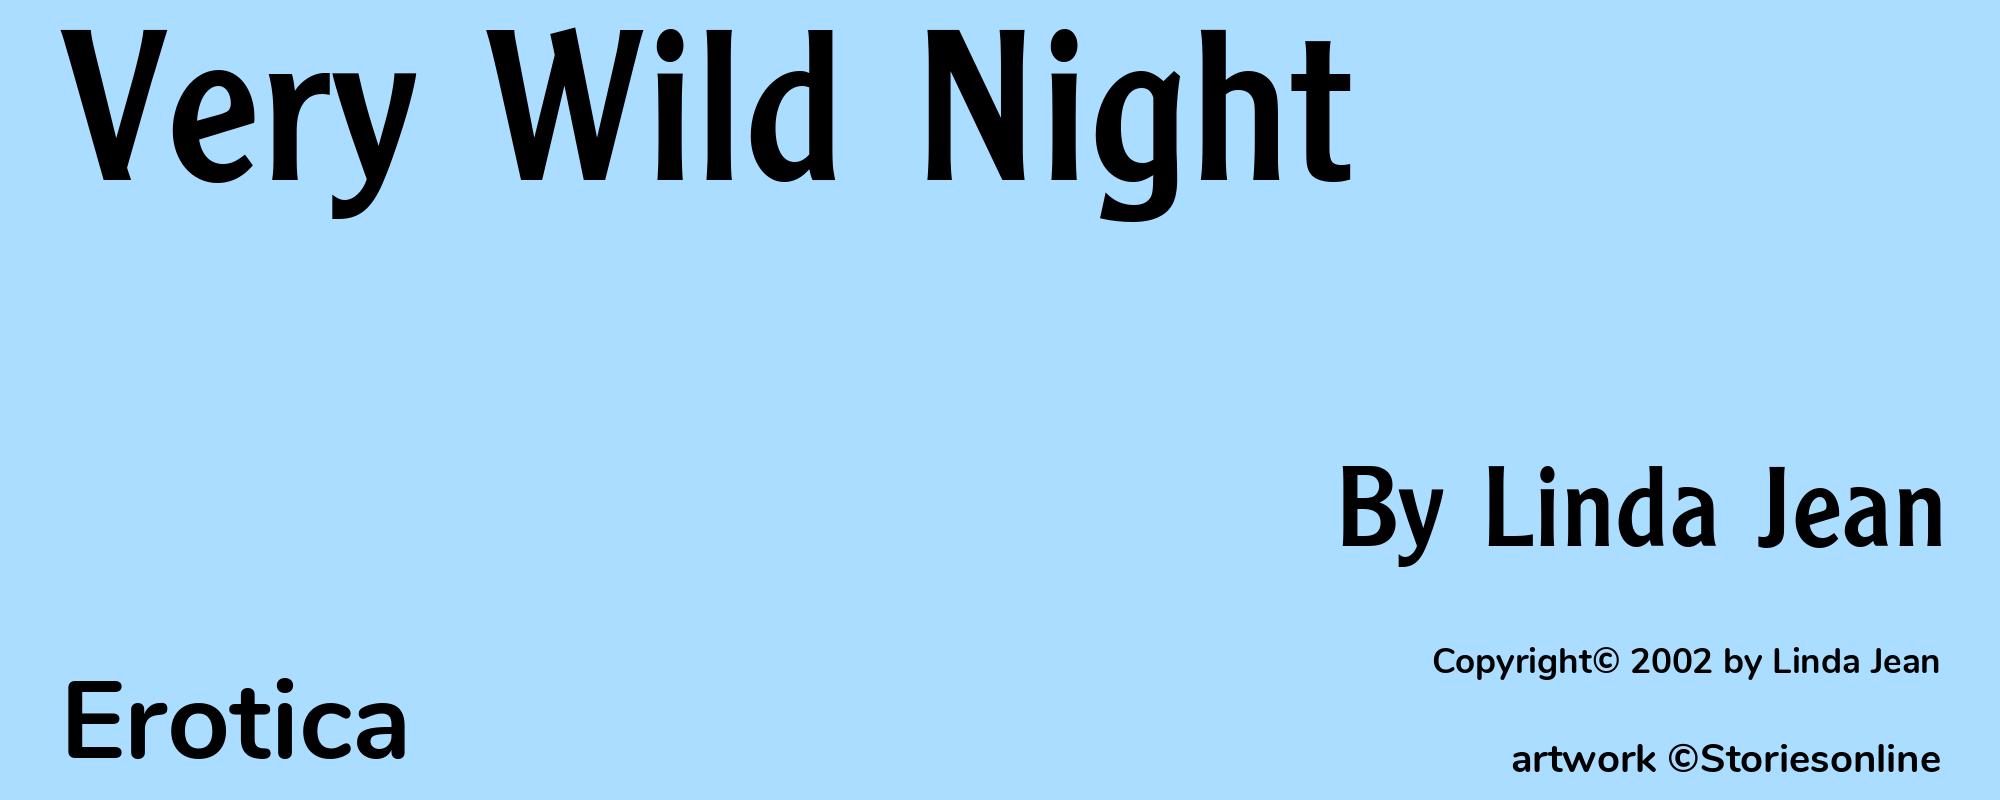 Very Wild Night - Cover